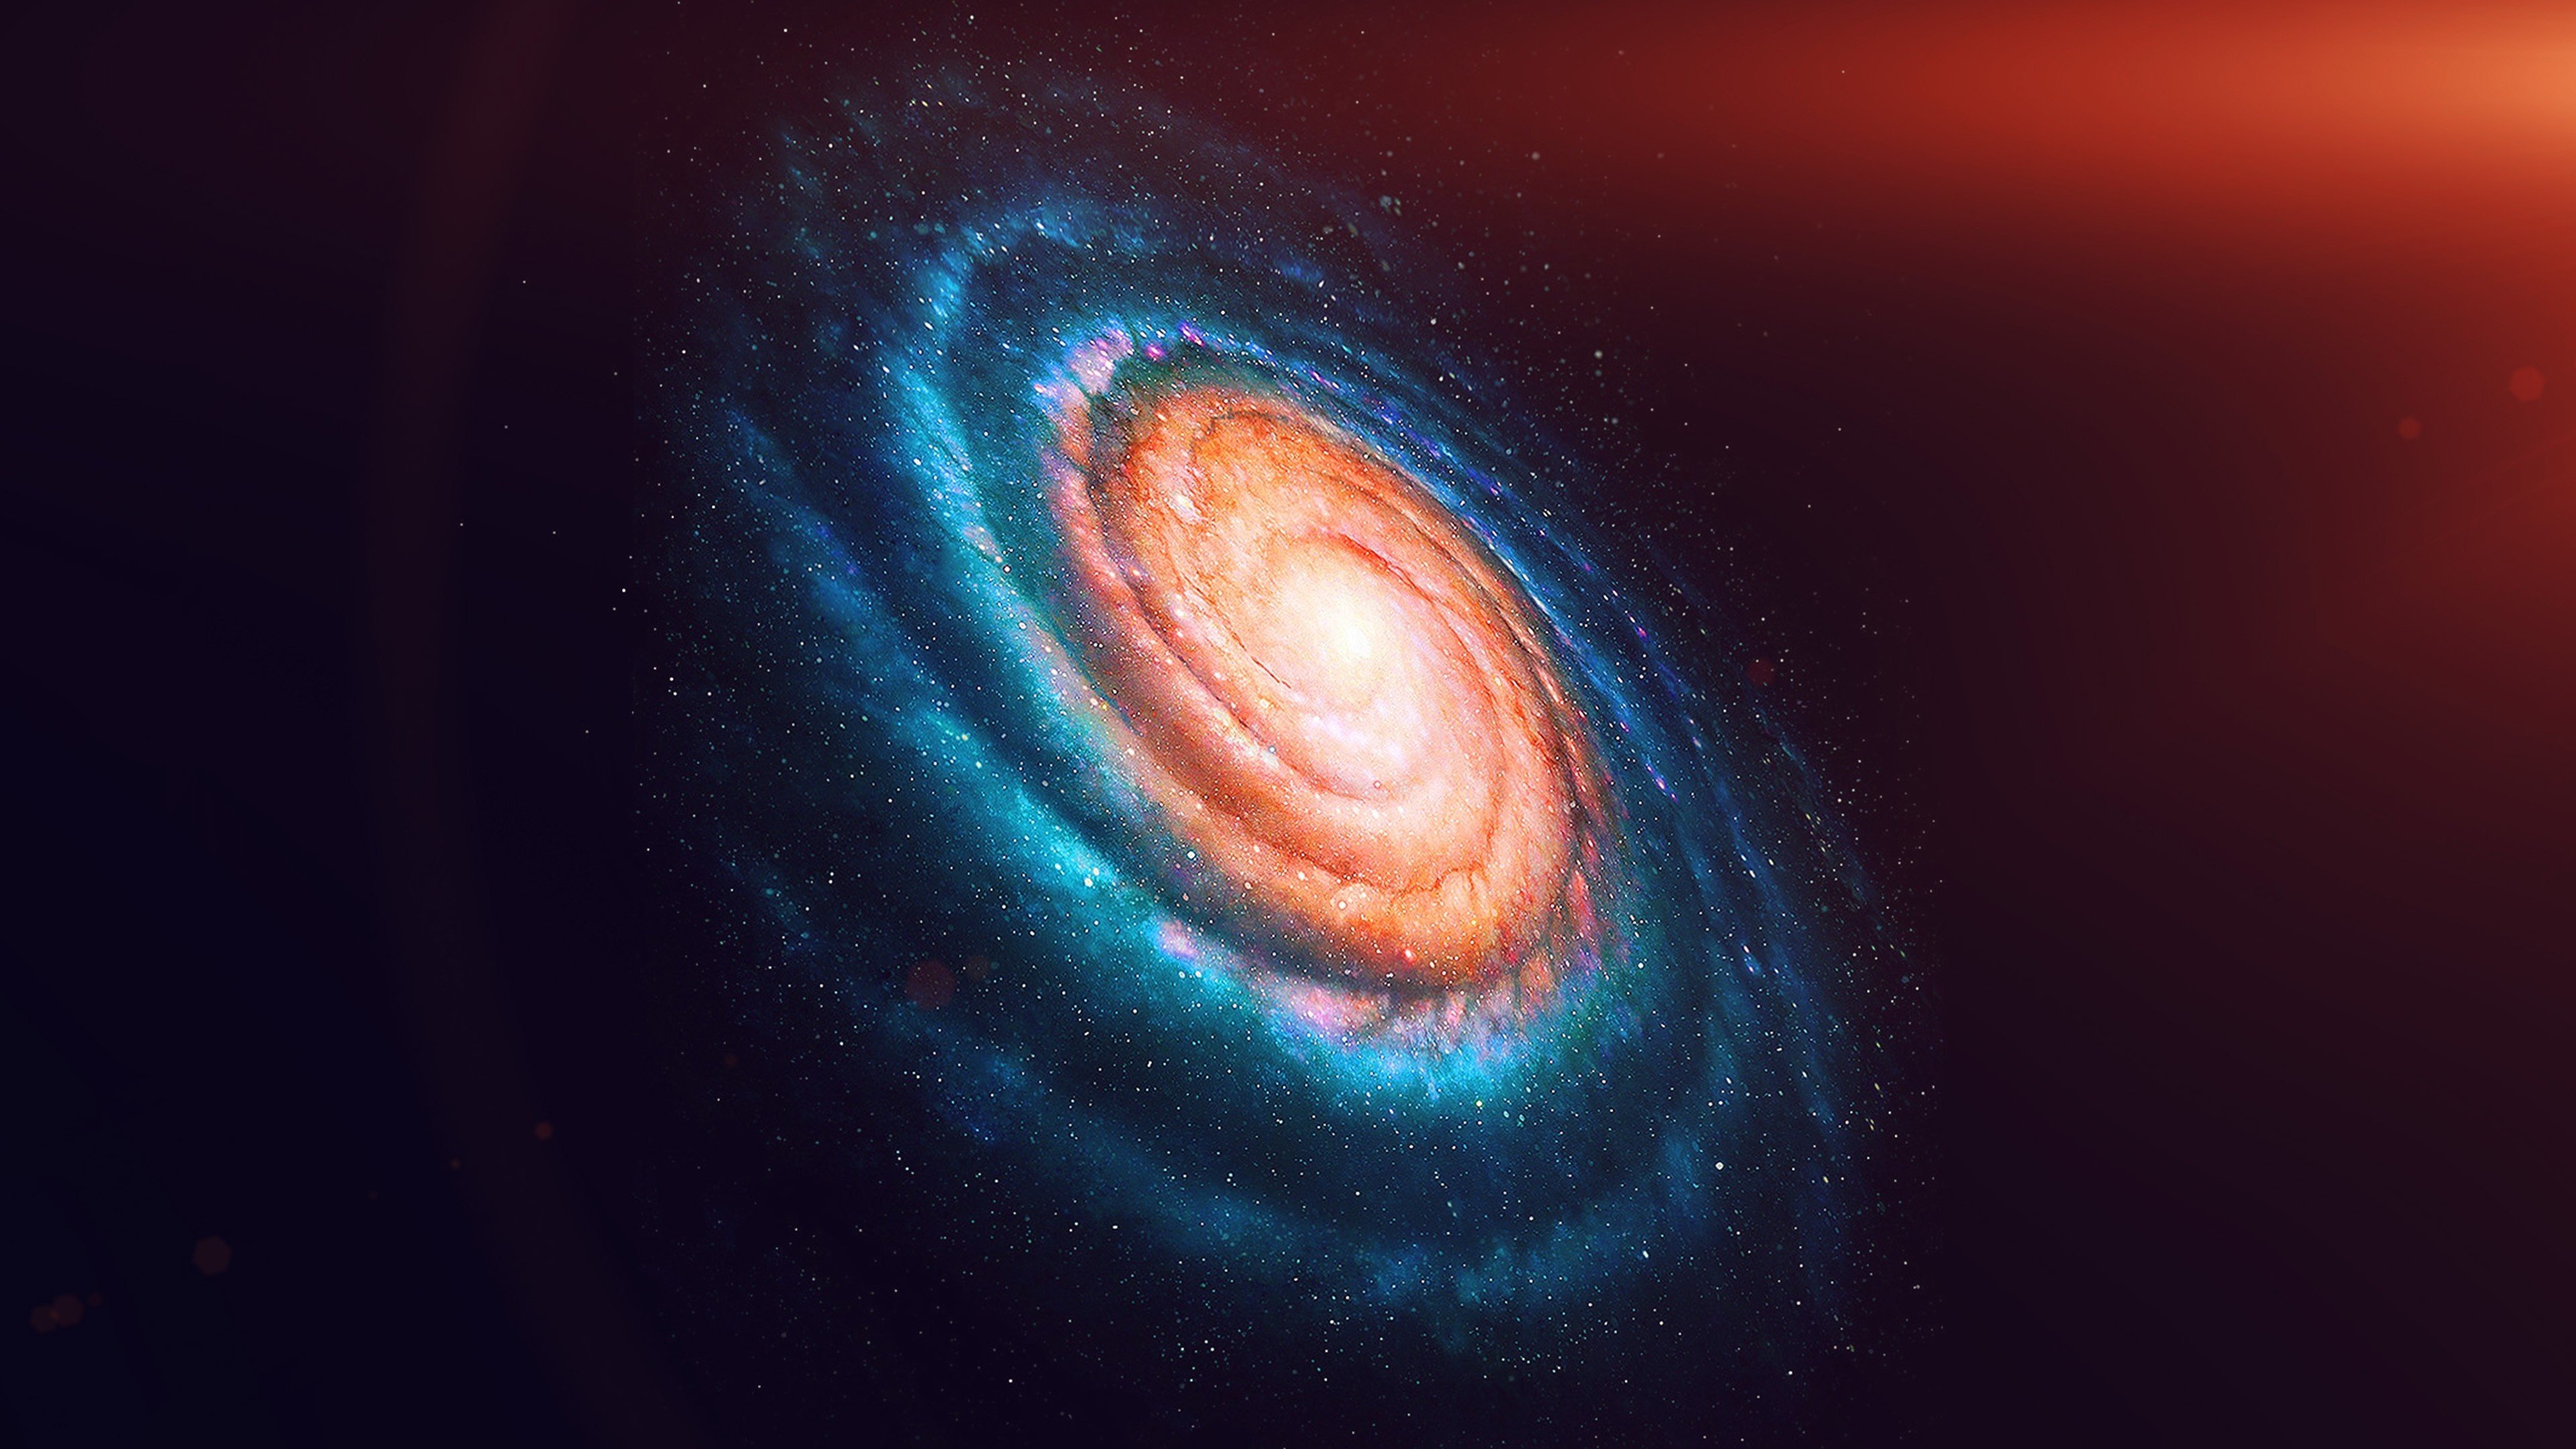 Galaxy 4k, HD Digital Universe, 4k Wallpaper, Image